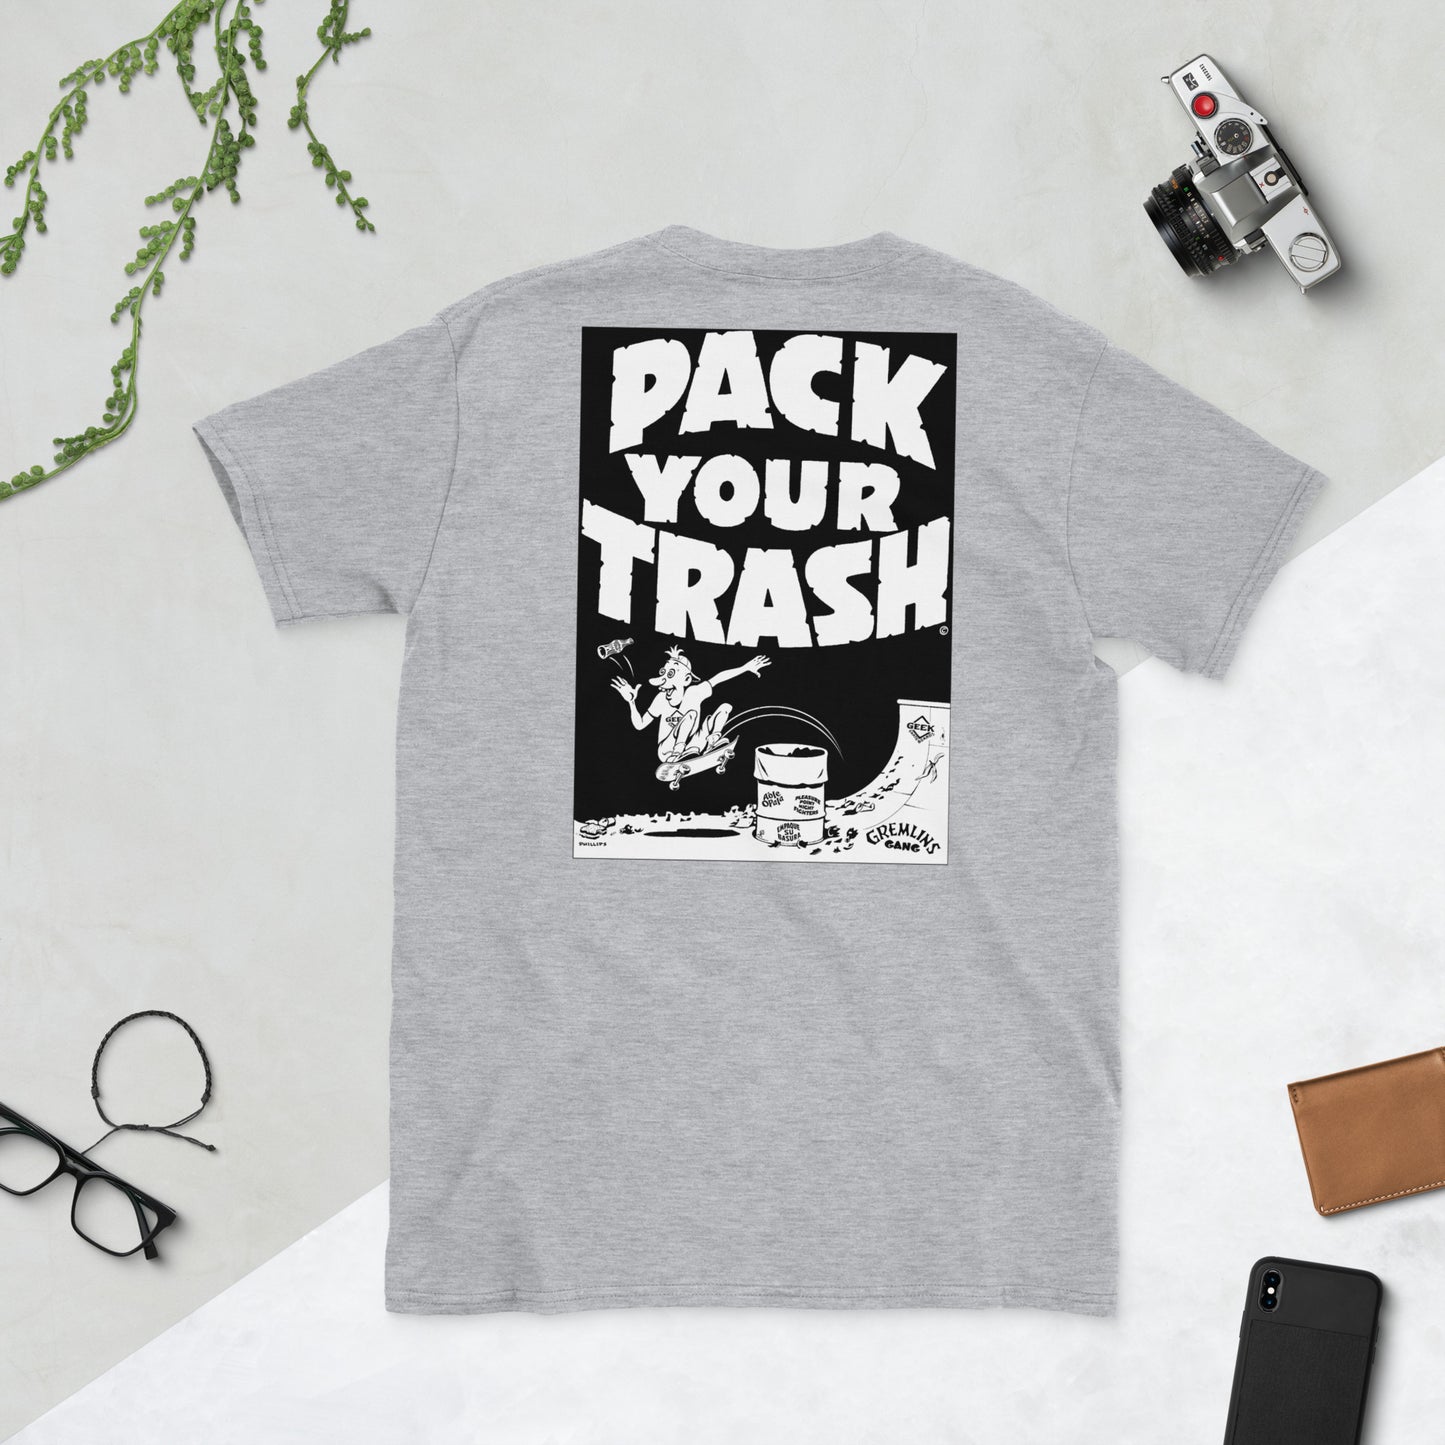 Pack Your Trash - Skater Geek - Dark print on light shirt - Short-Sleeve Unisex T-Shirt